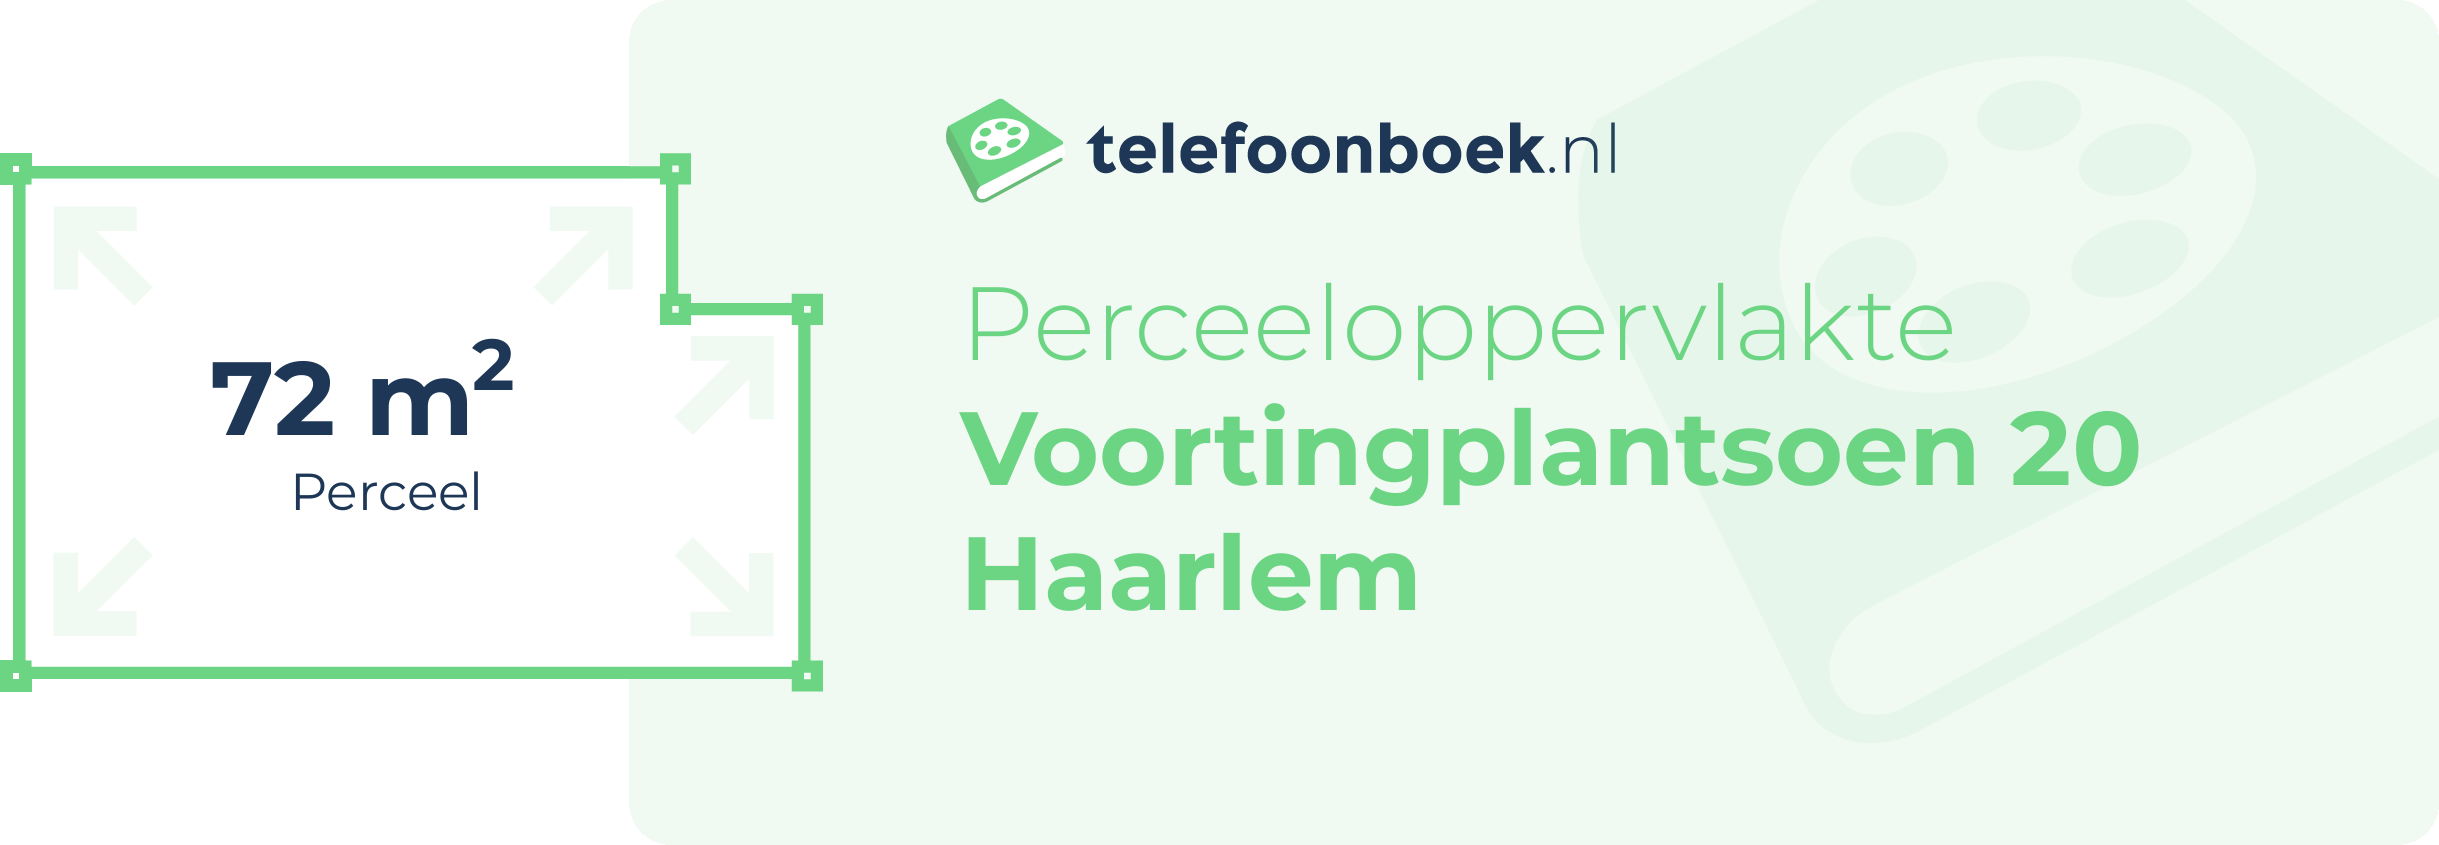 Perceeloppervlakte Voortingplantsoen 20 Haarlem